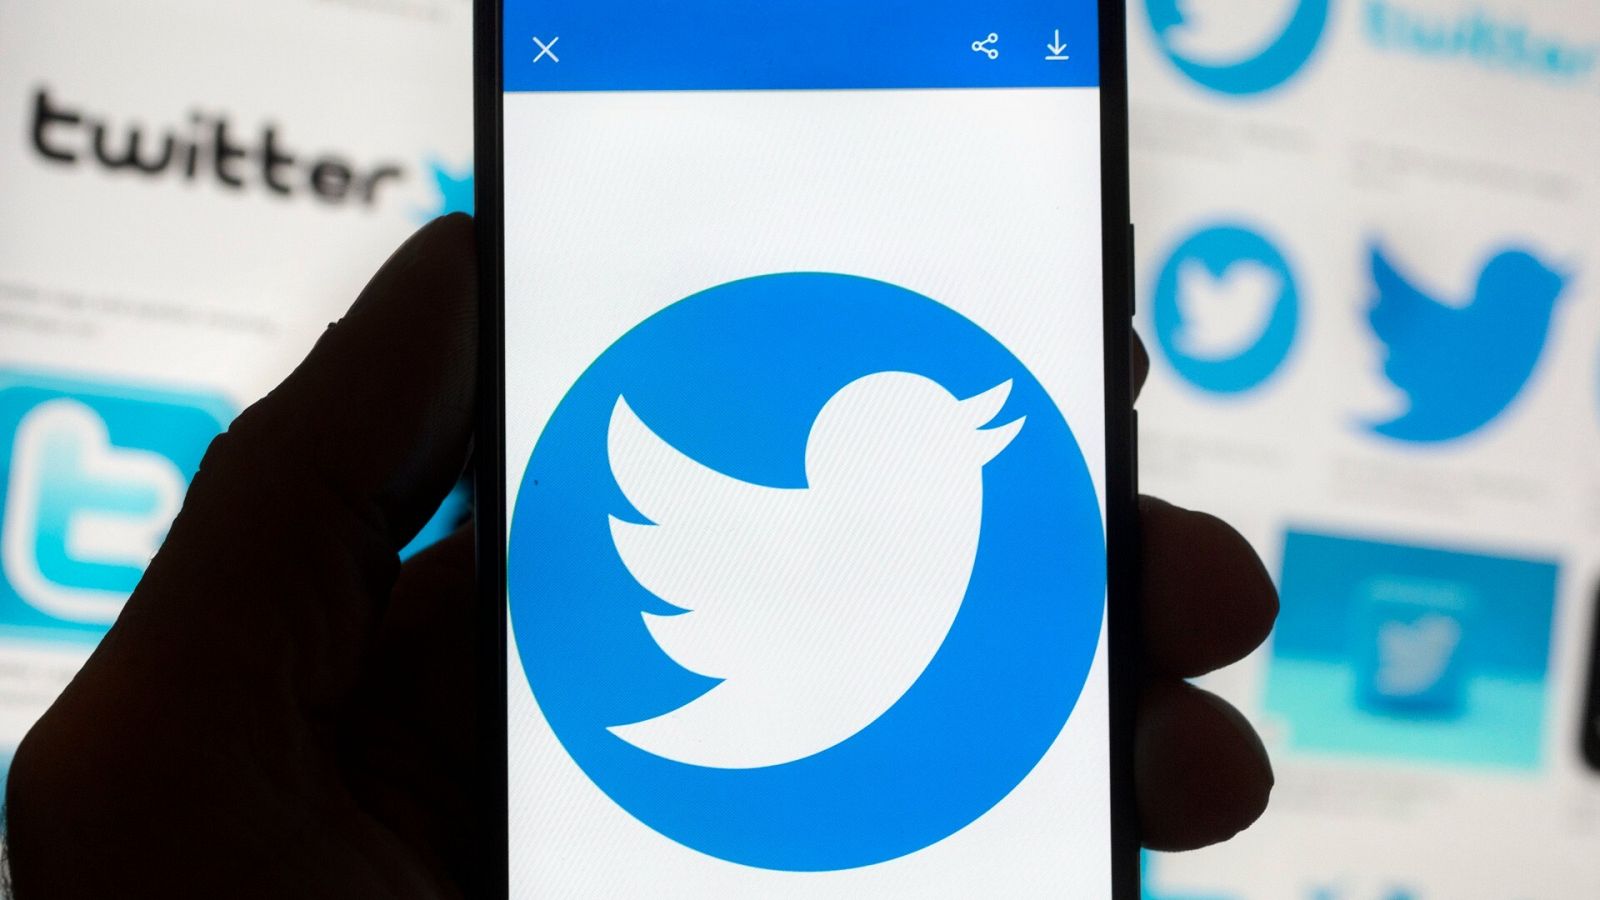 El logo de Twitter en un teléfono móvil